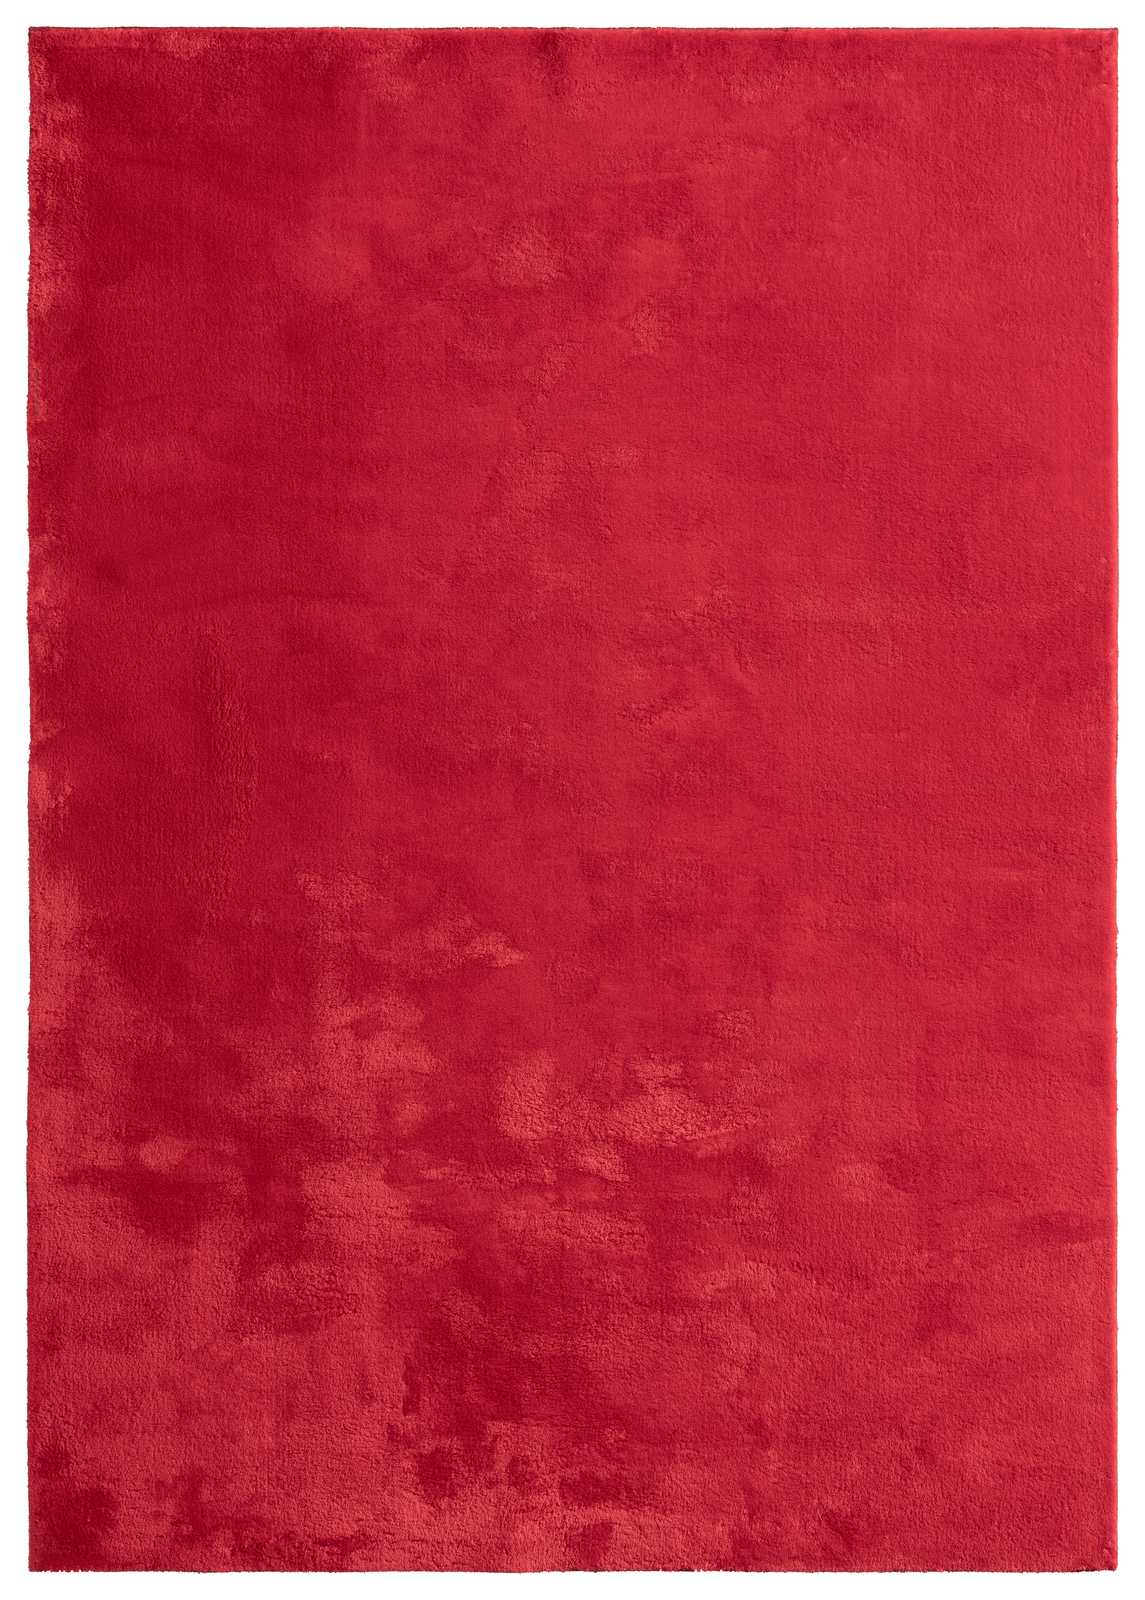             Round high pile carpet in red - Ø 120 cm
        